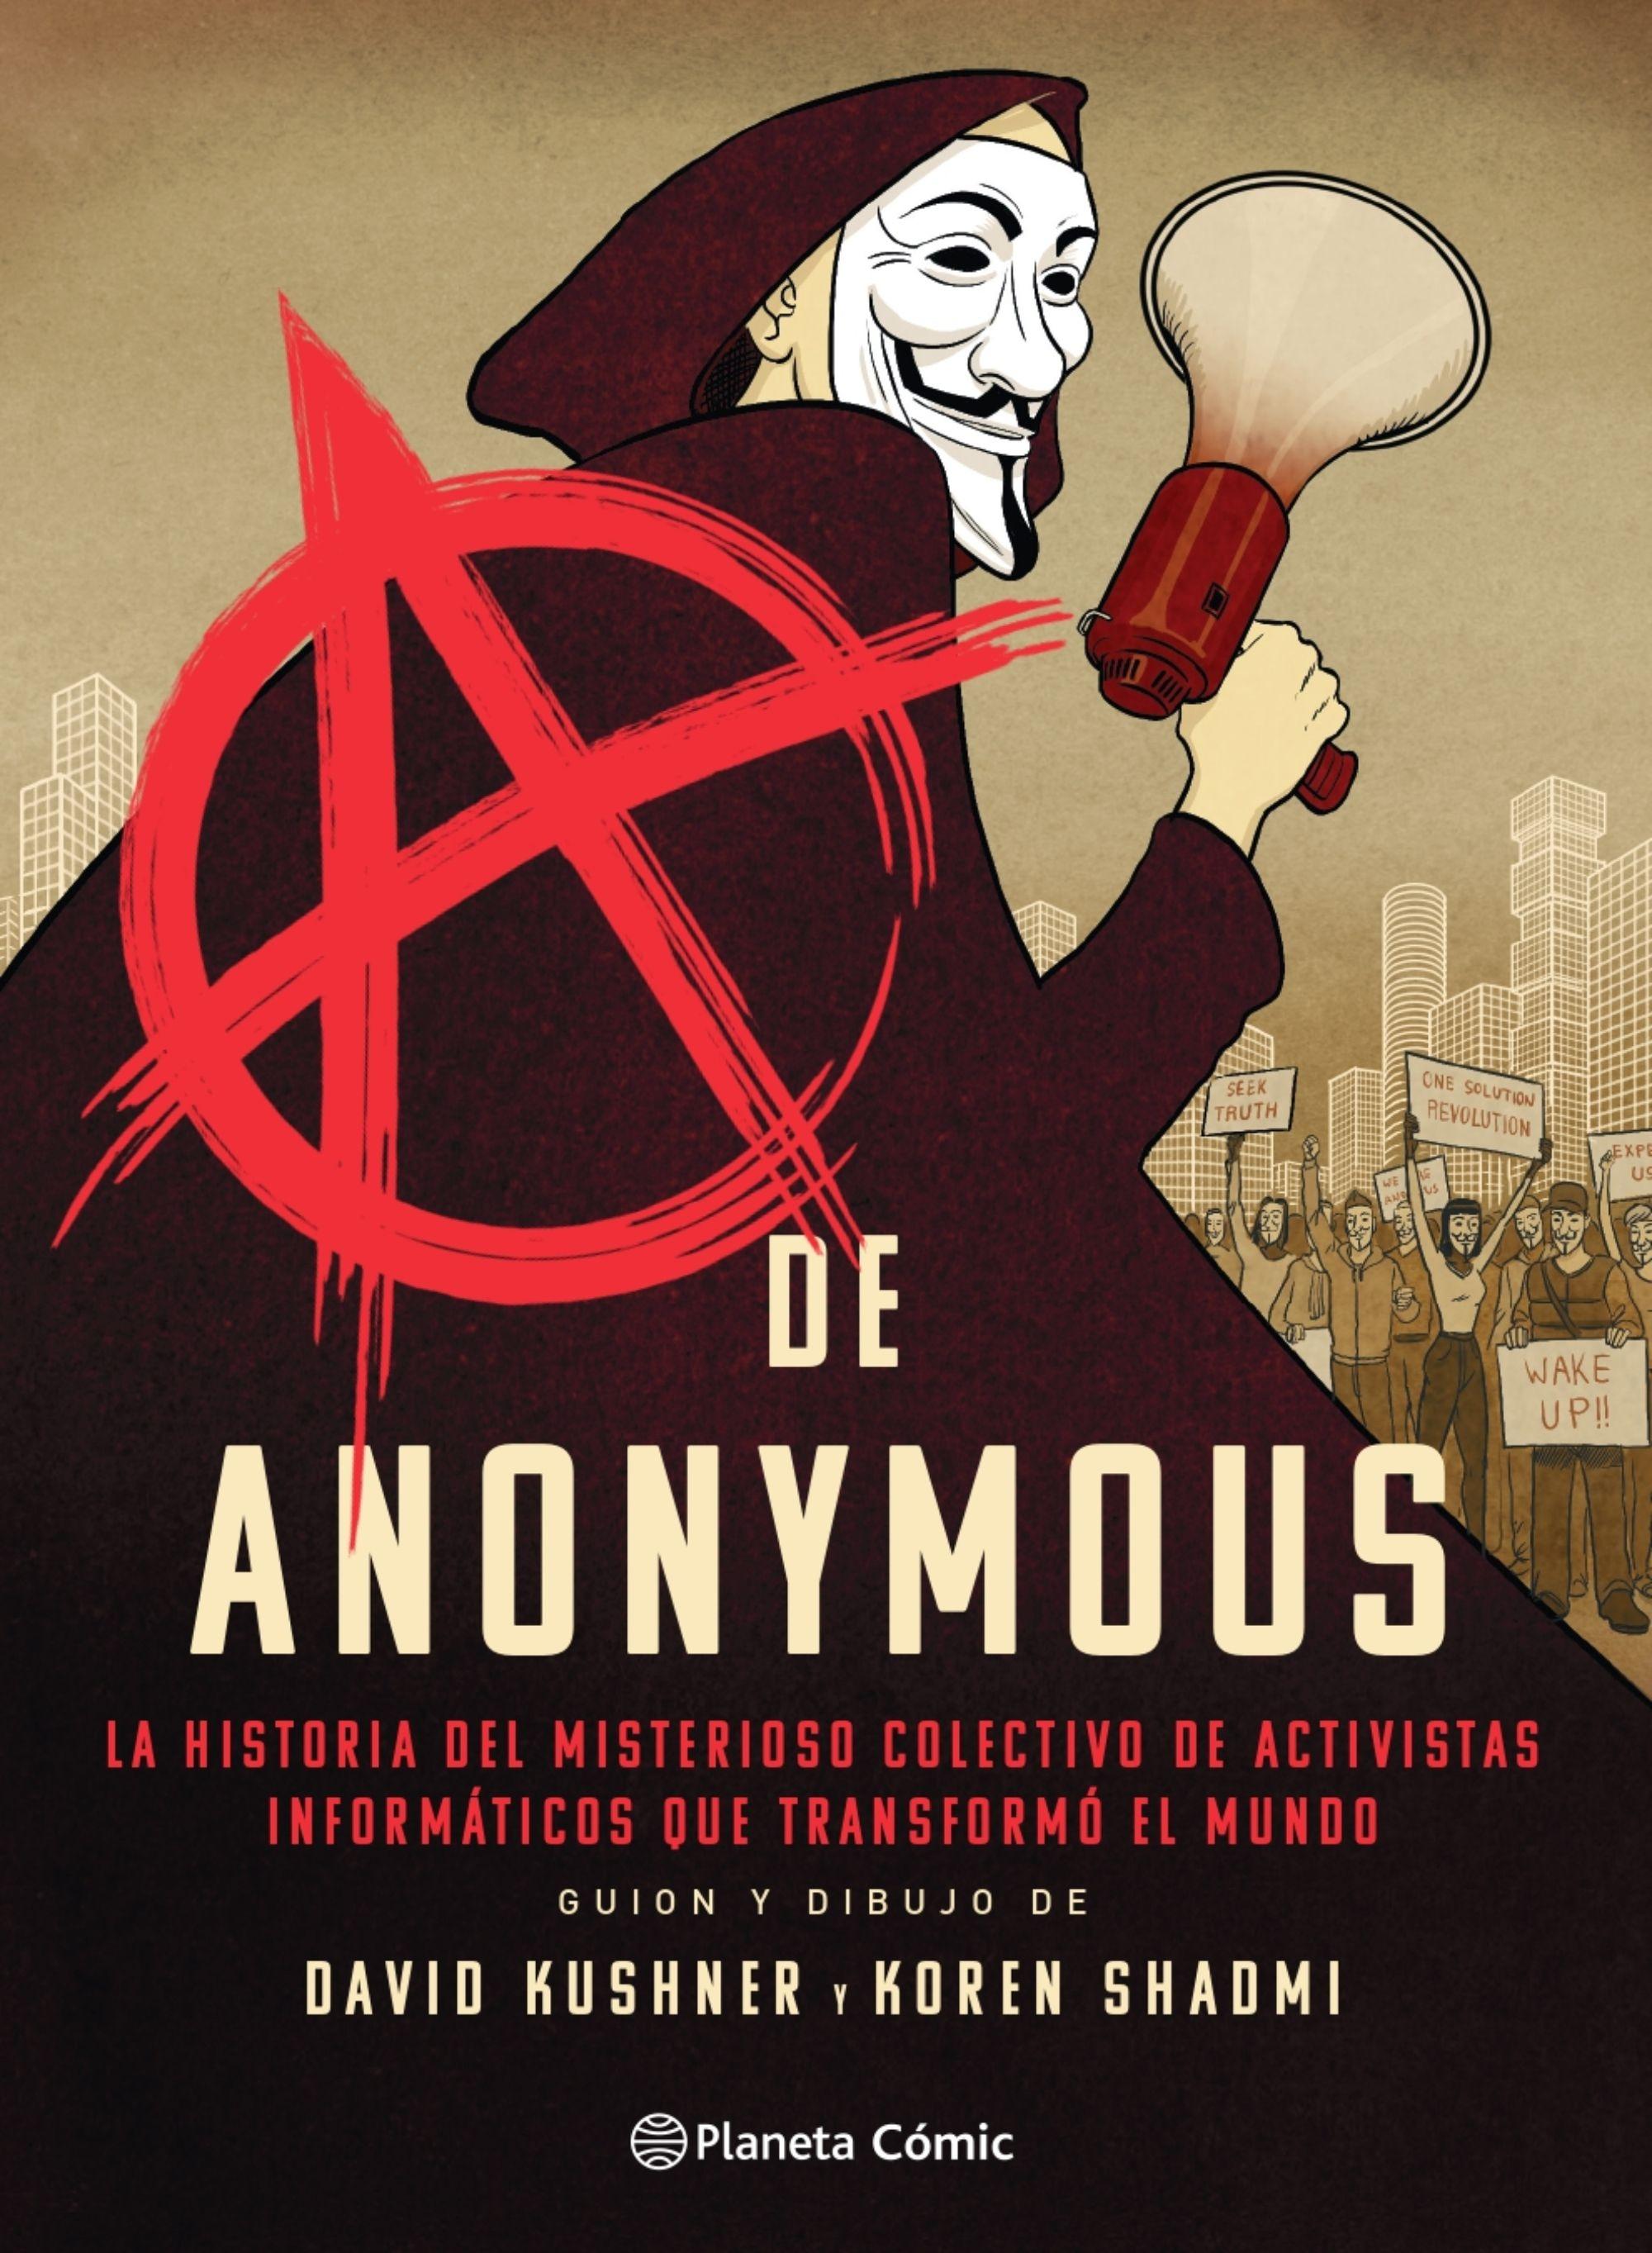 A de Anonymous (novela gráfica) "La historia del misterioso colectivo de activistas informáticos que tran"